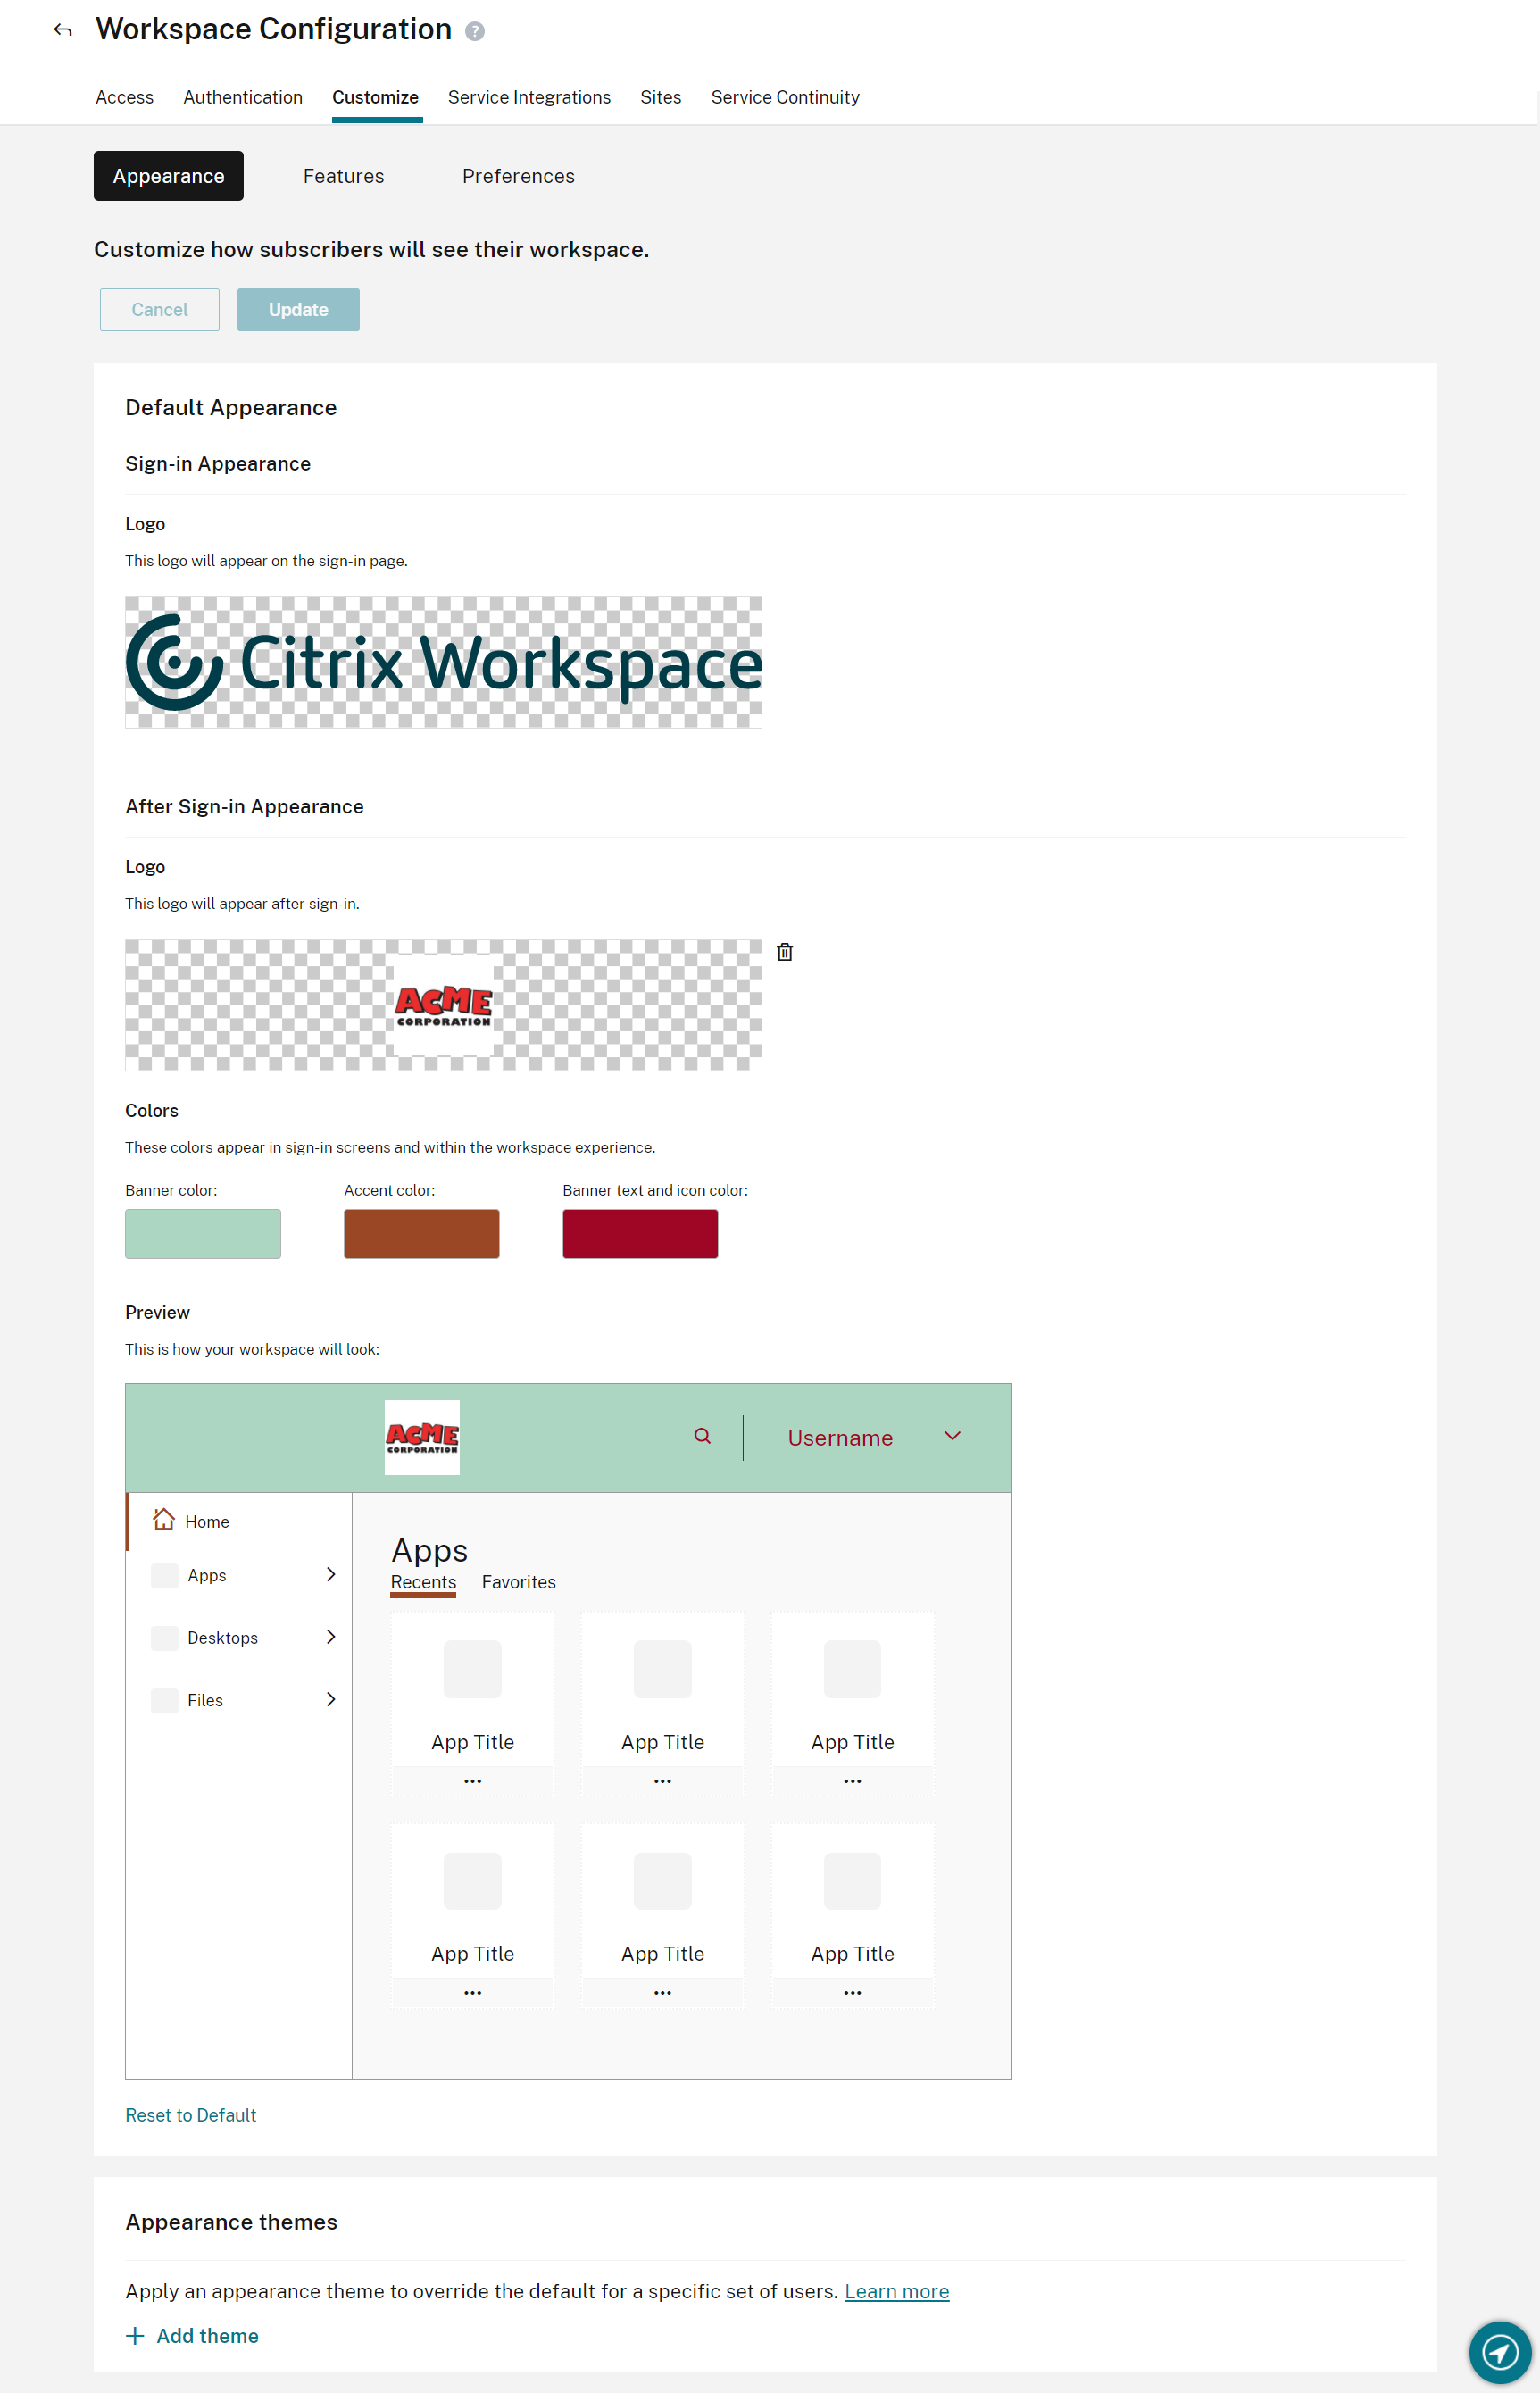 Workspace for citrix software